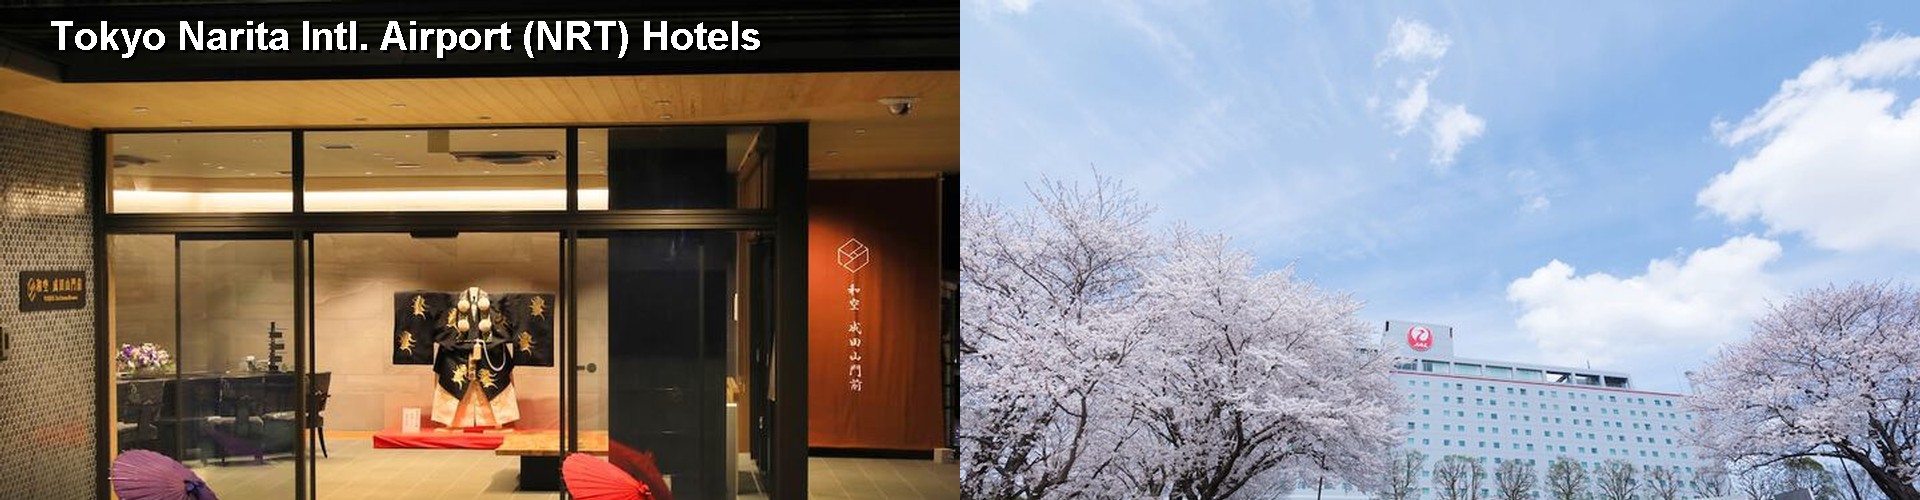 5 Best Hotels near Tokyo Narita Intl. Airport (NRT)